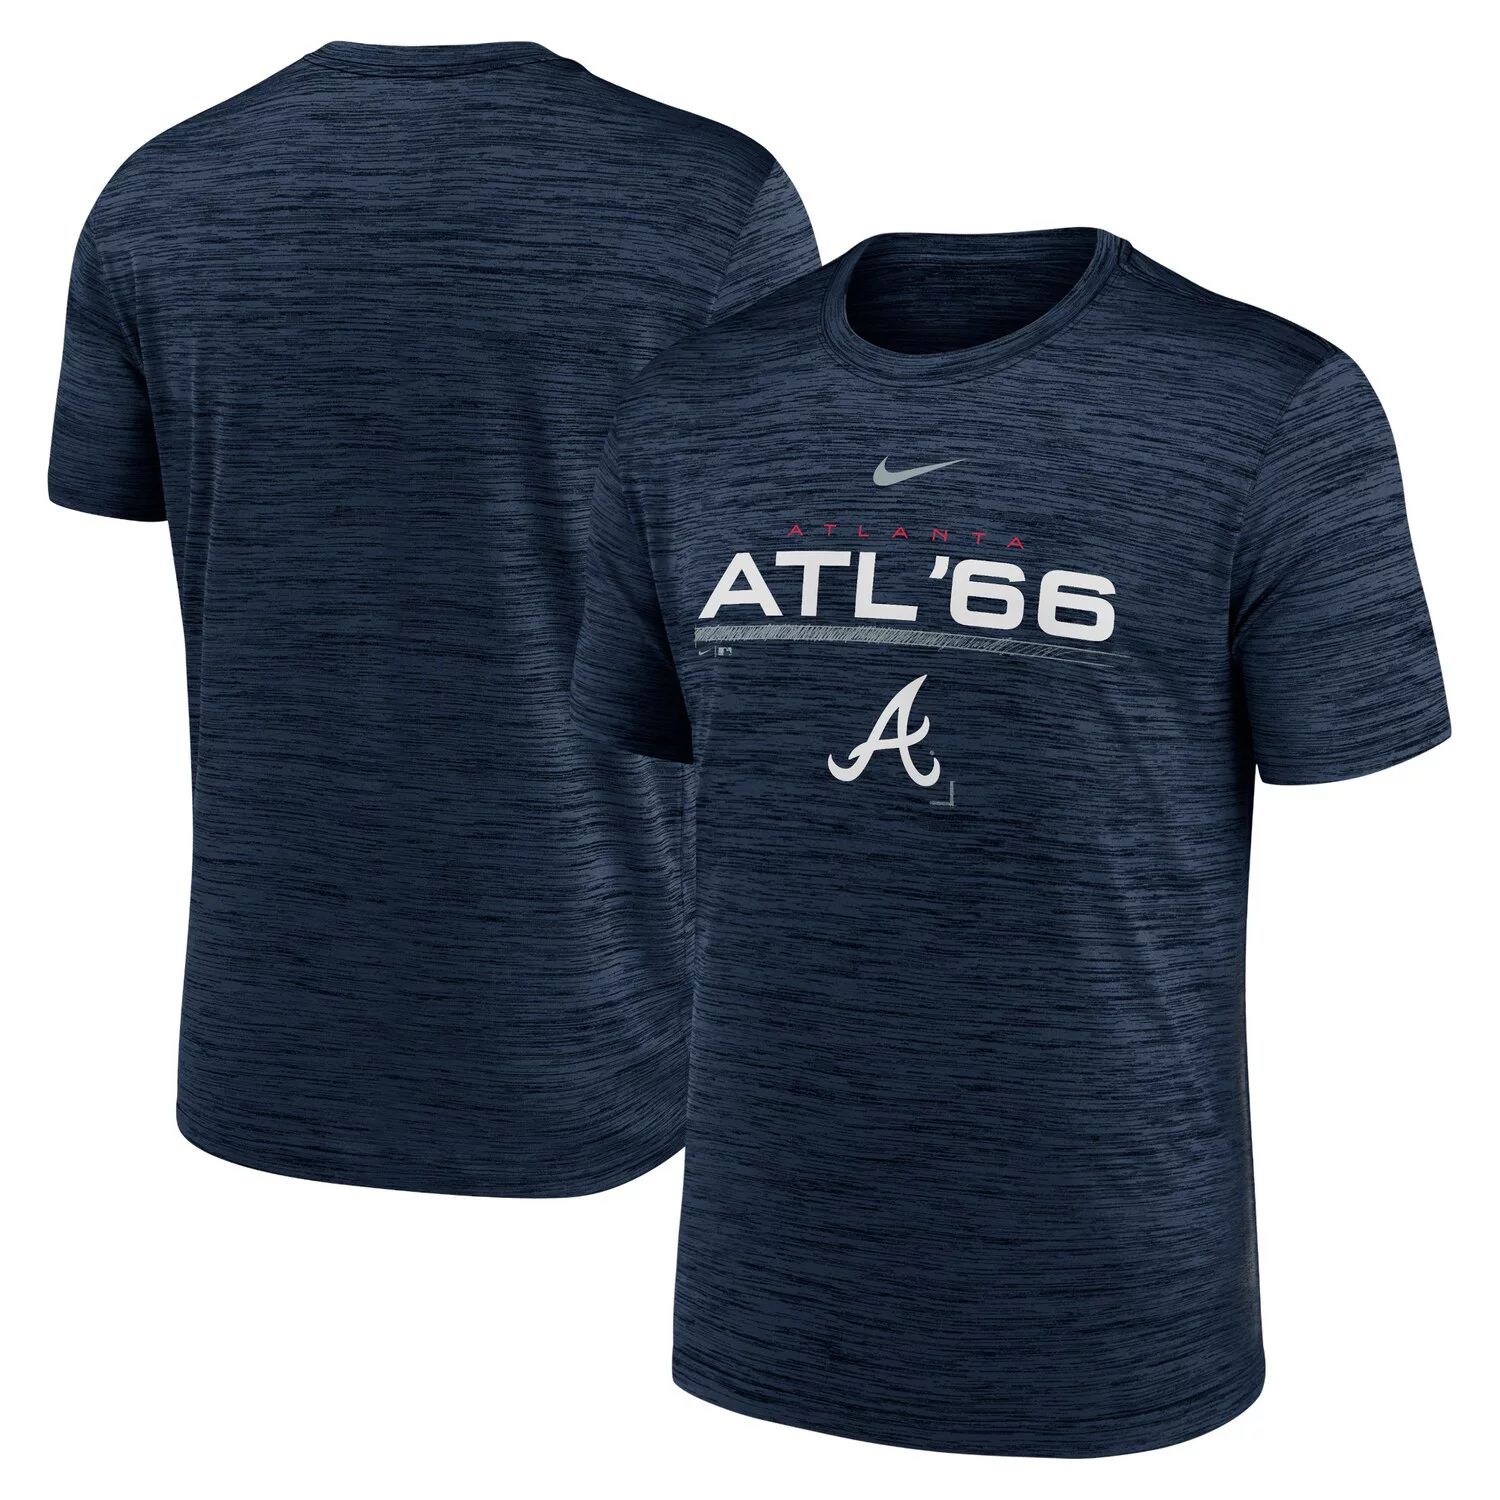 Мужская темно-синяя футболка Atlanta Braves с надписью Velocity Performance Nike